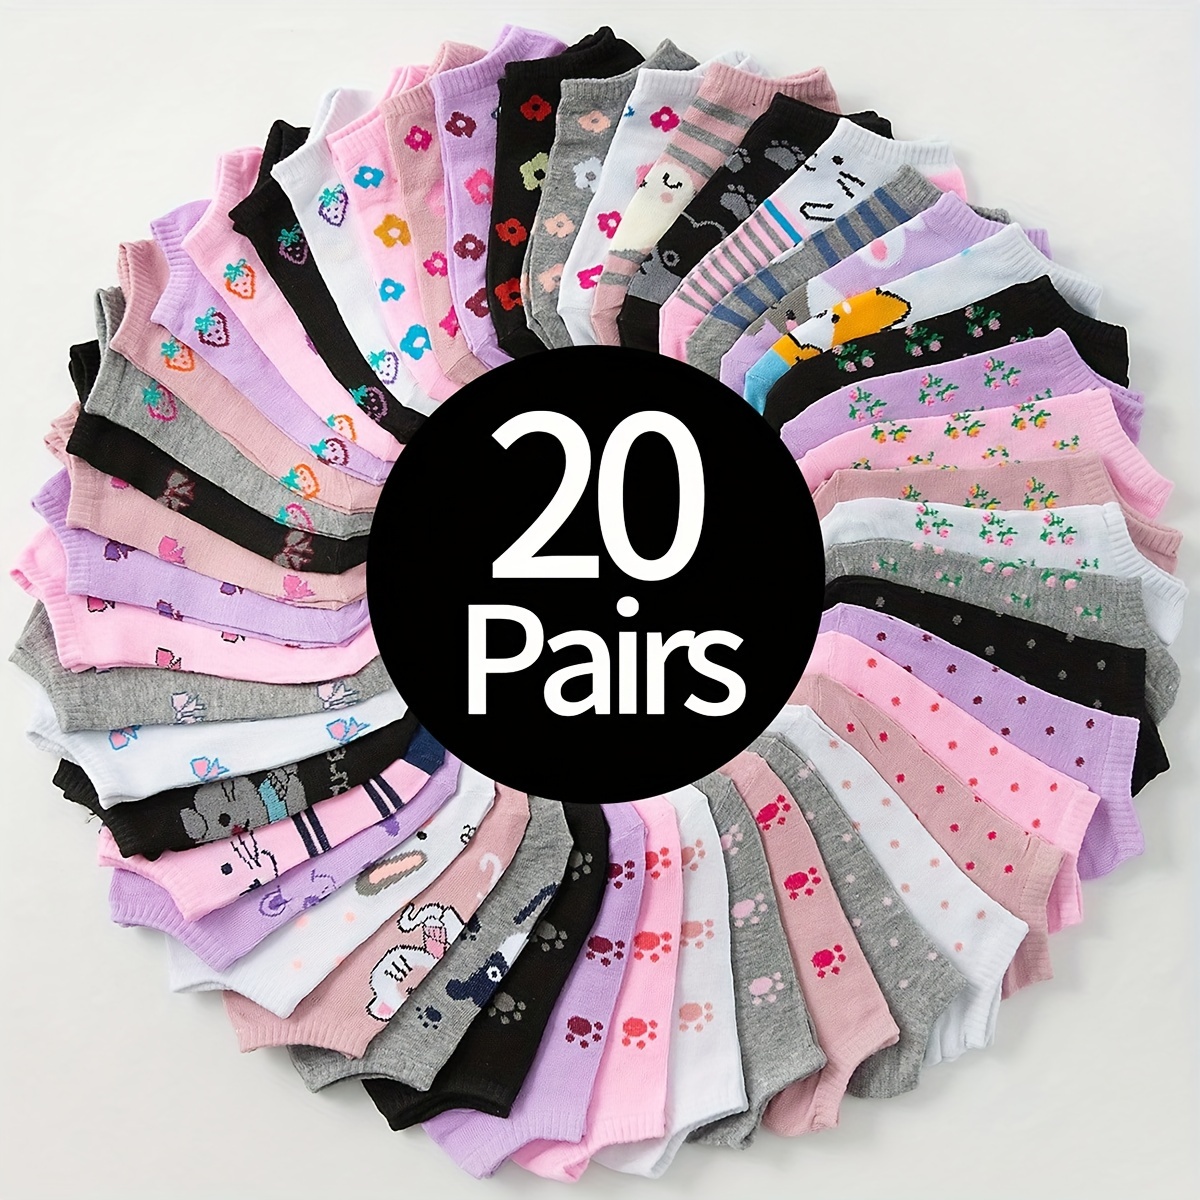 

20 Pairs Random Color Socks, Comfy & Breathable Low Cut Ankle Socks, Women's Stockings & Hosiery